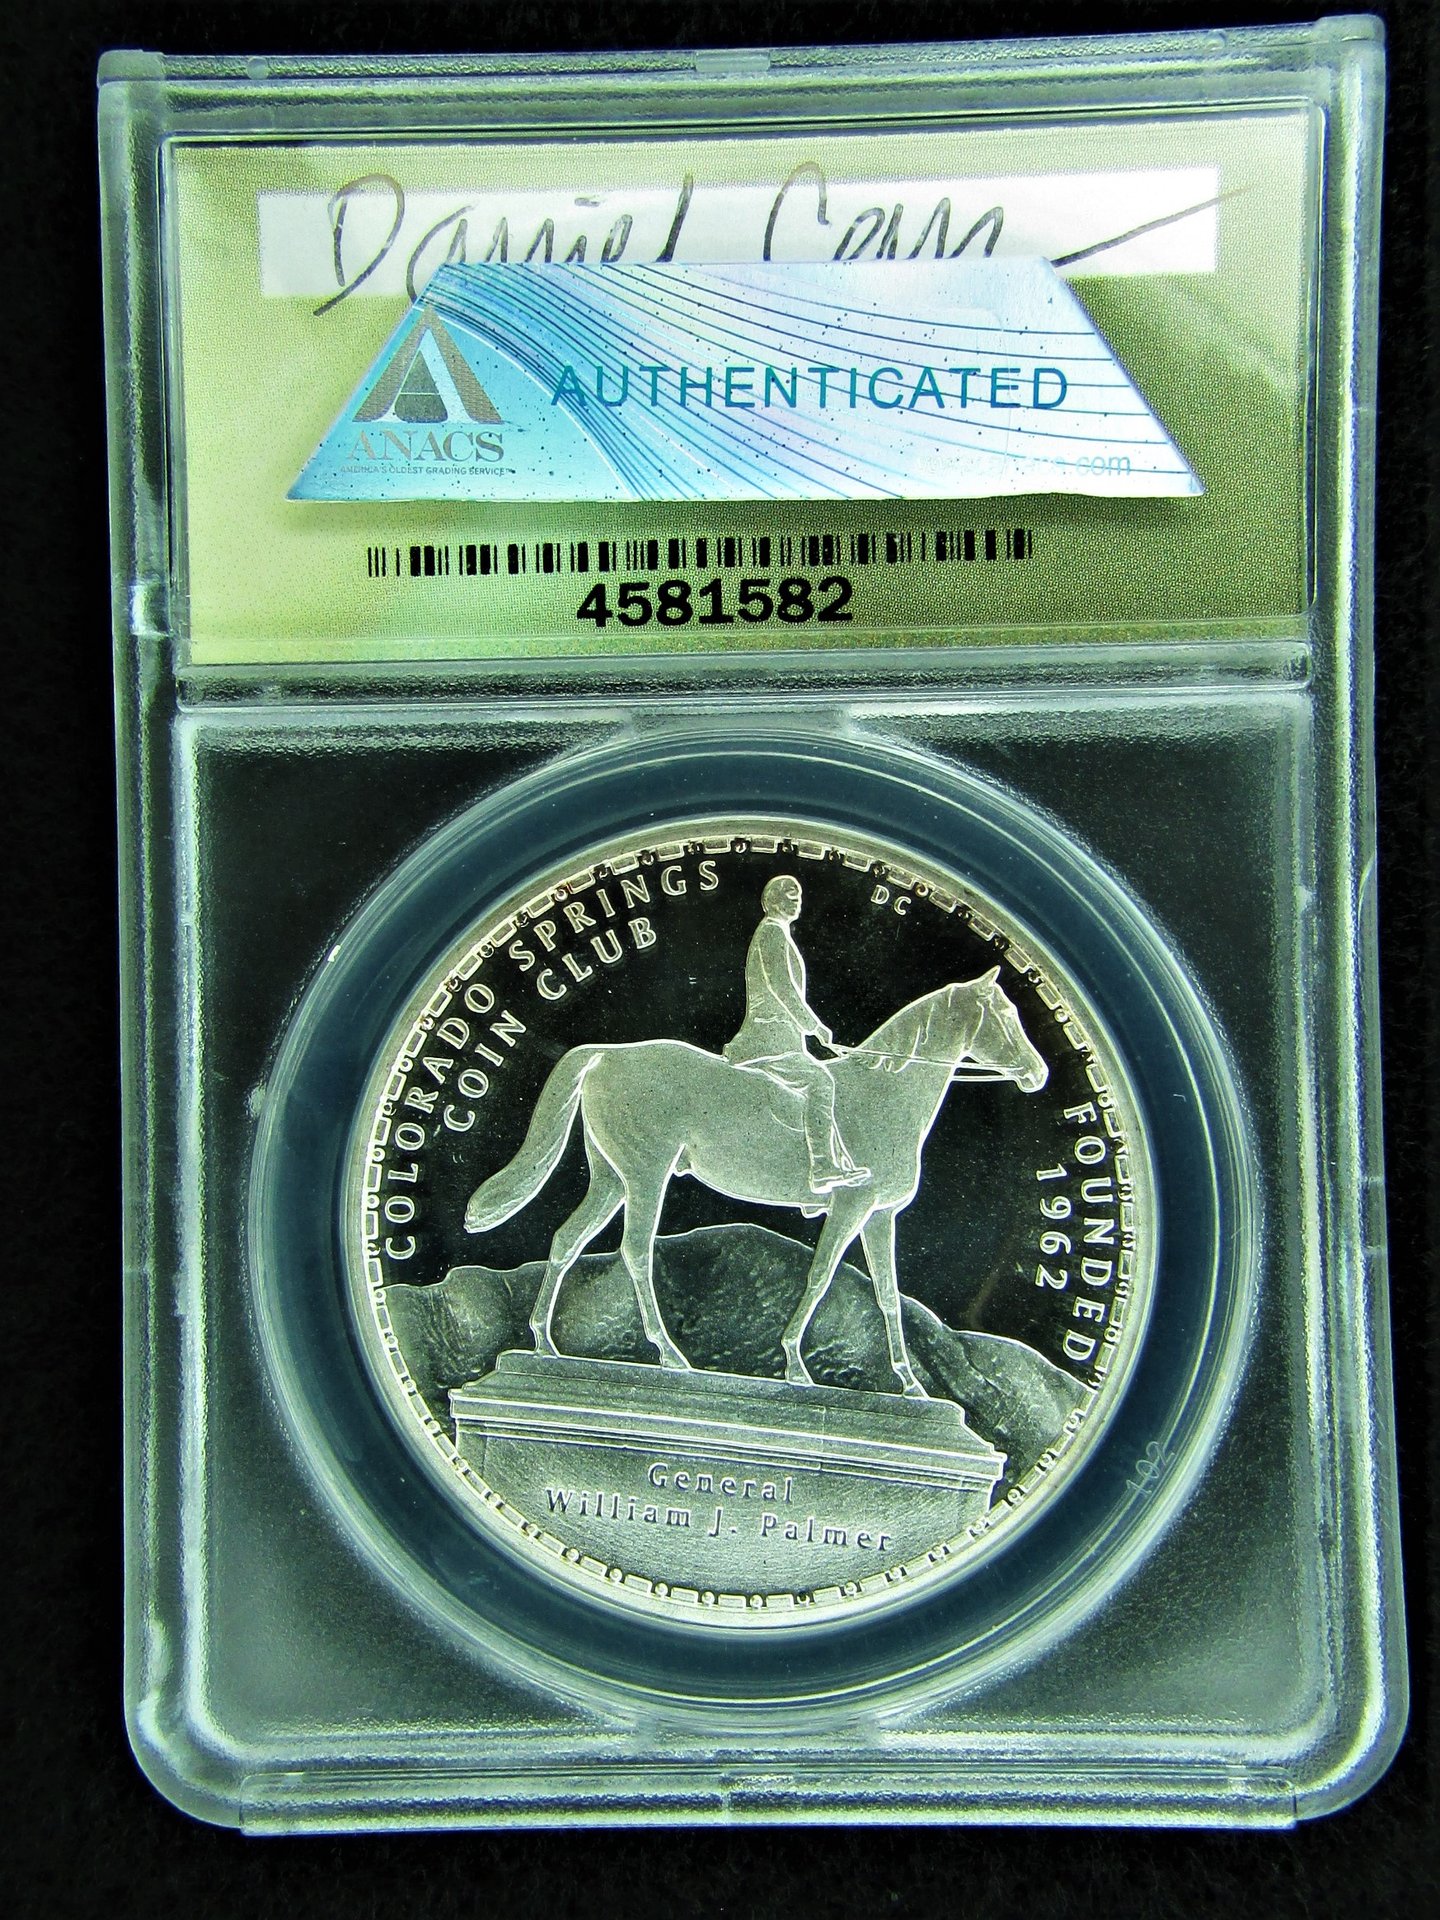 2012 Colorado Springs Coin Club 50th Anniversary (silver proof) - reverse.JPG